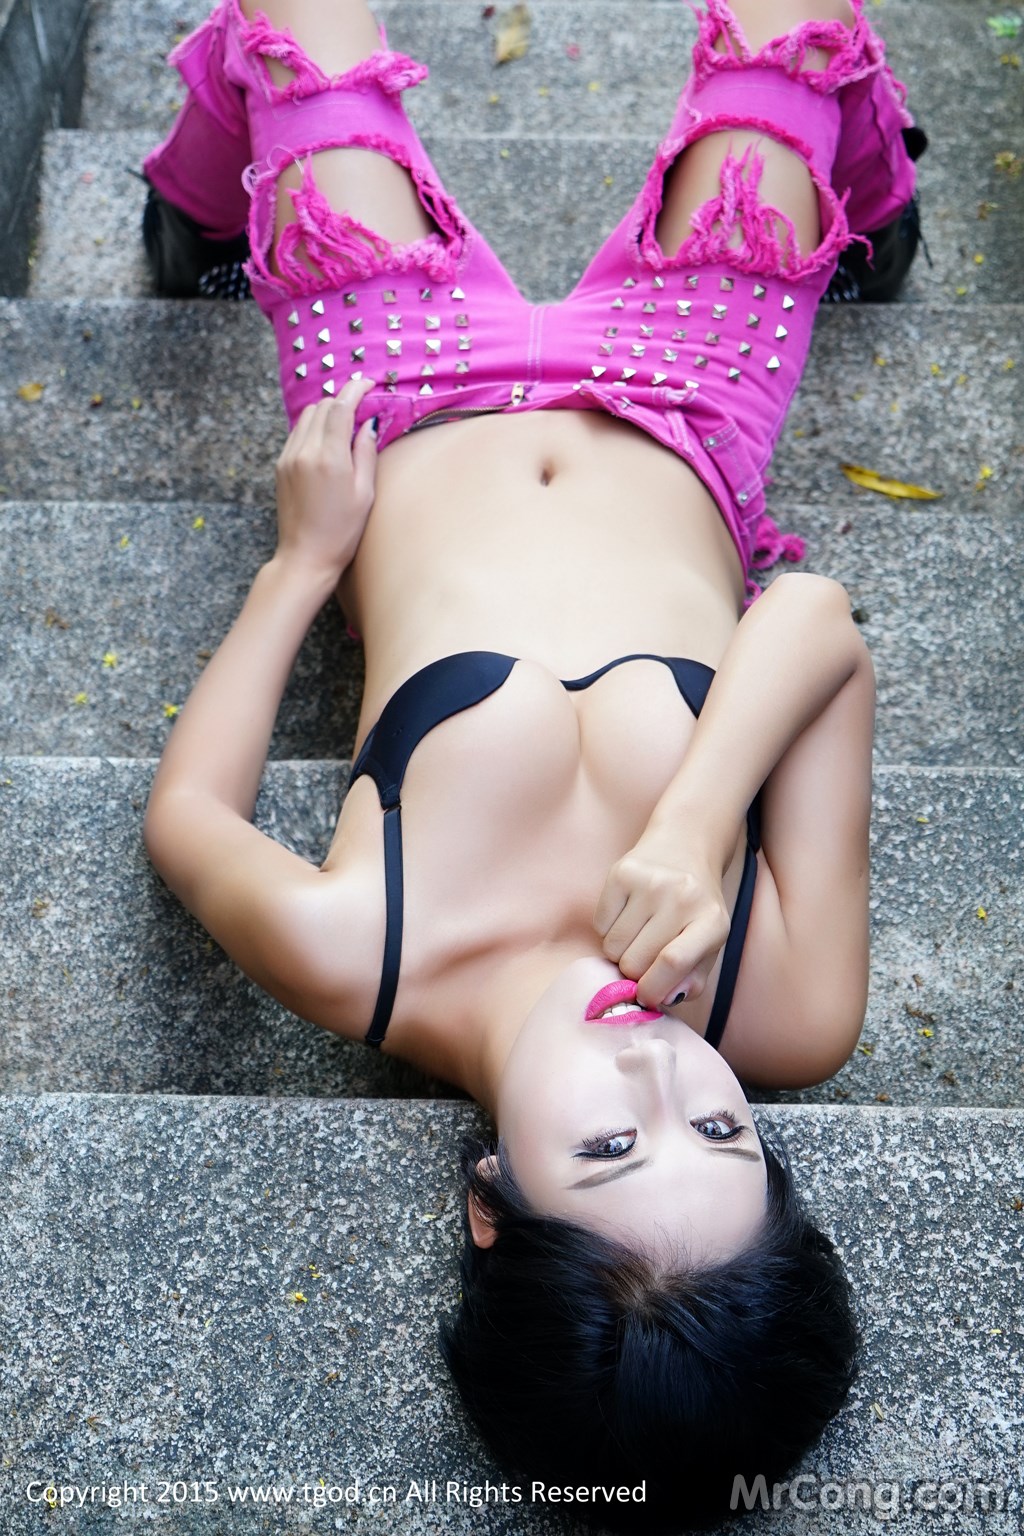 TGOD 2015-09-19: Model Na Yi Ling Er (娜 依 灵儿) (40 photos)